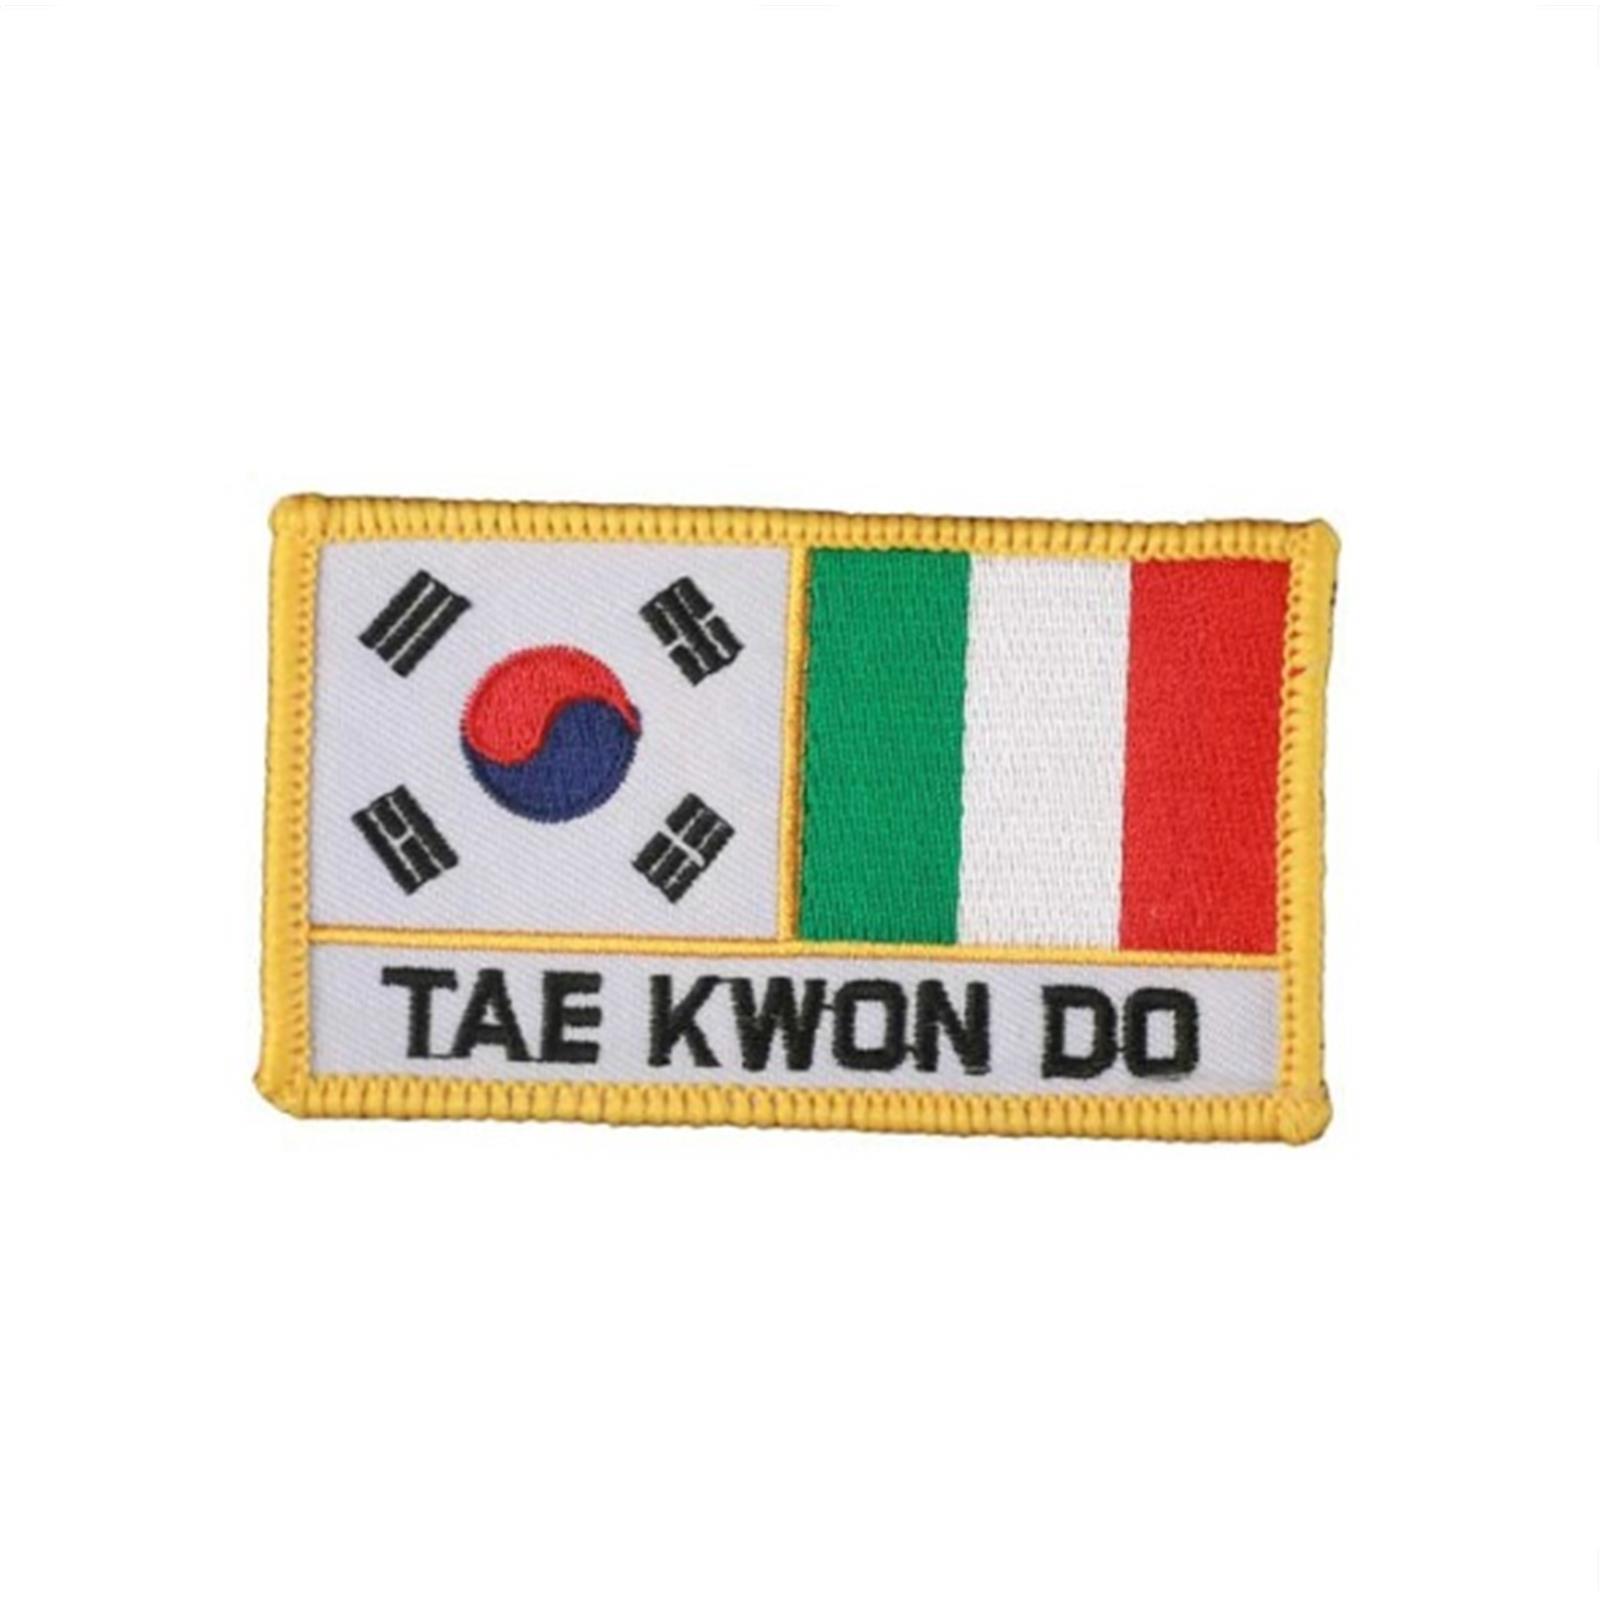 Dae Do Bandiera koreana piu scritta  korea e taekwndo  (5 * 10 cm - BIANCO)